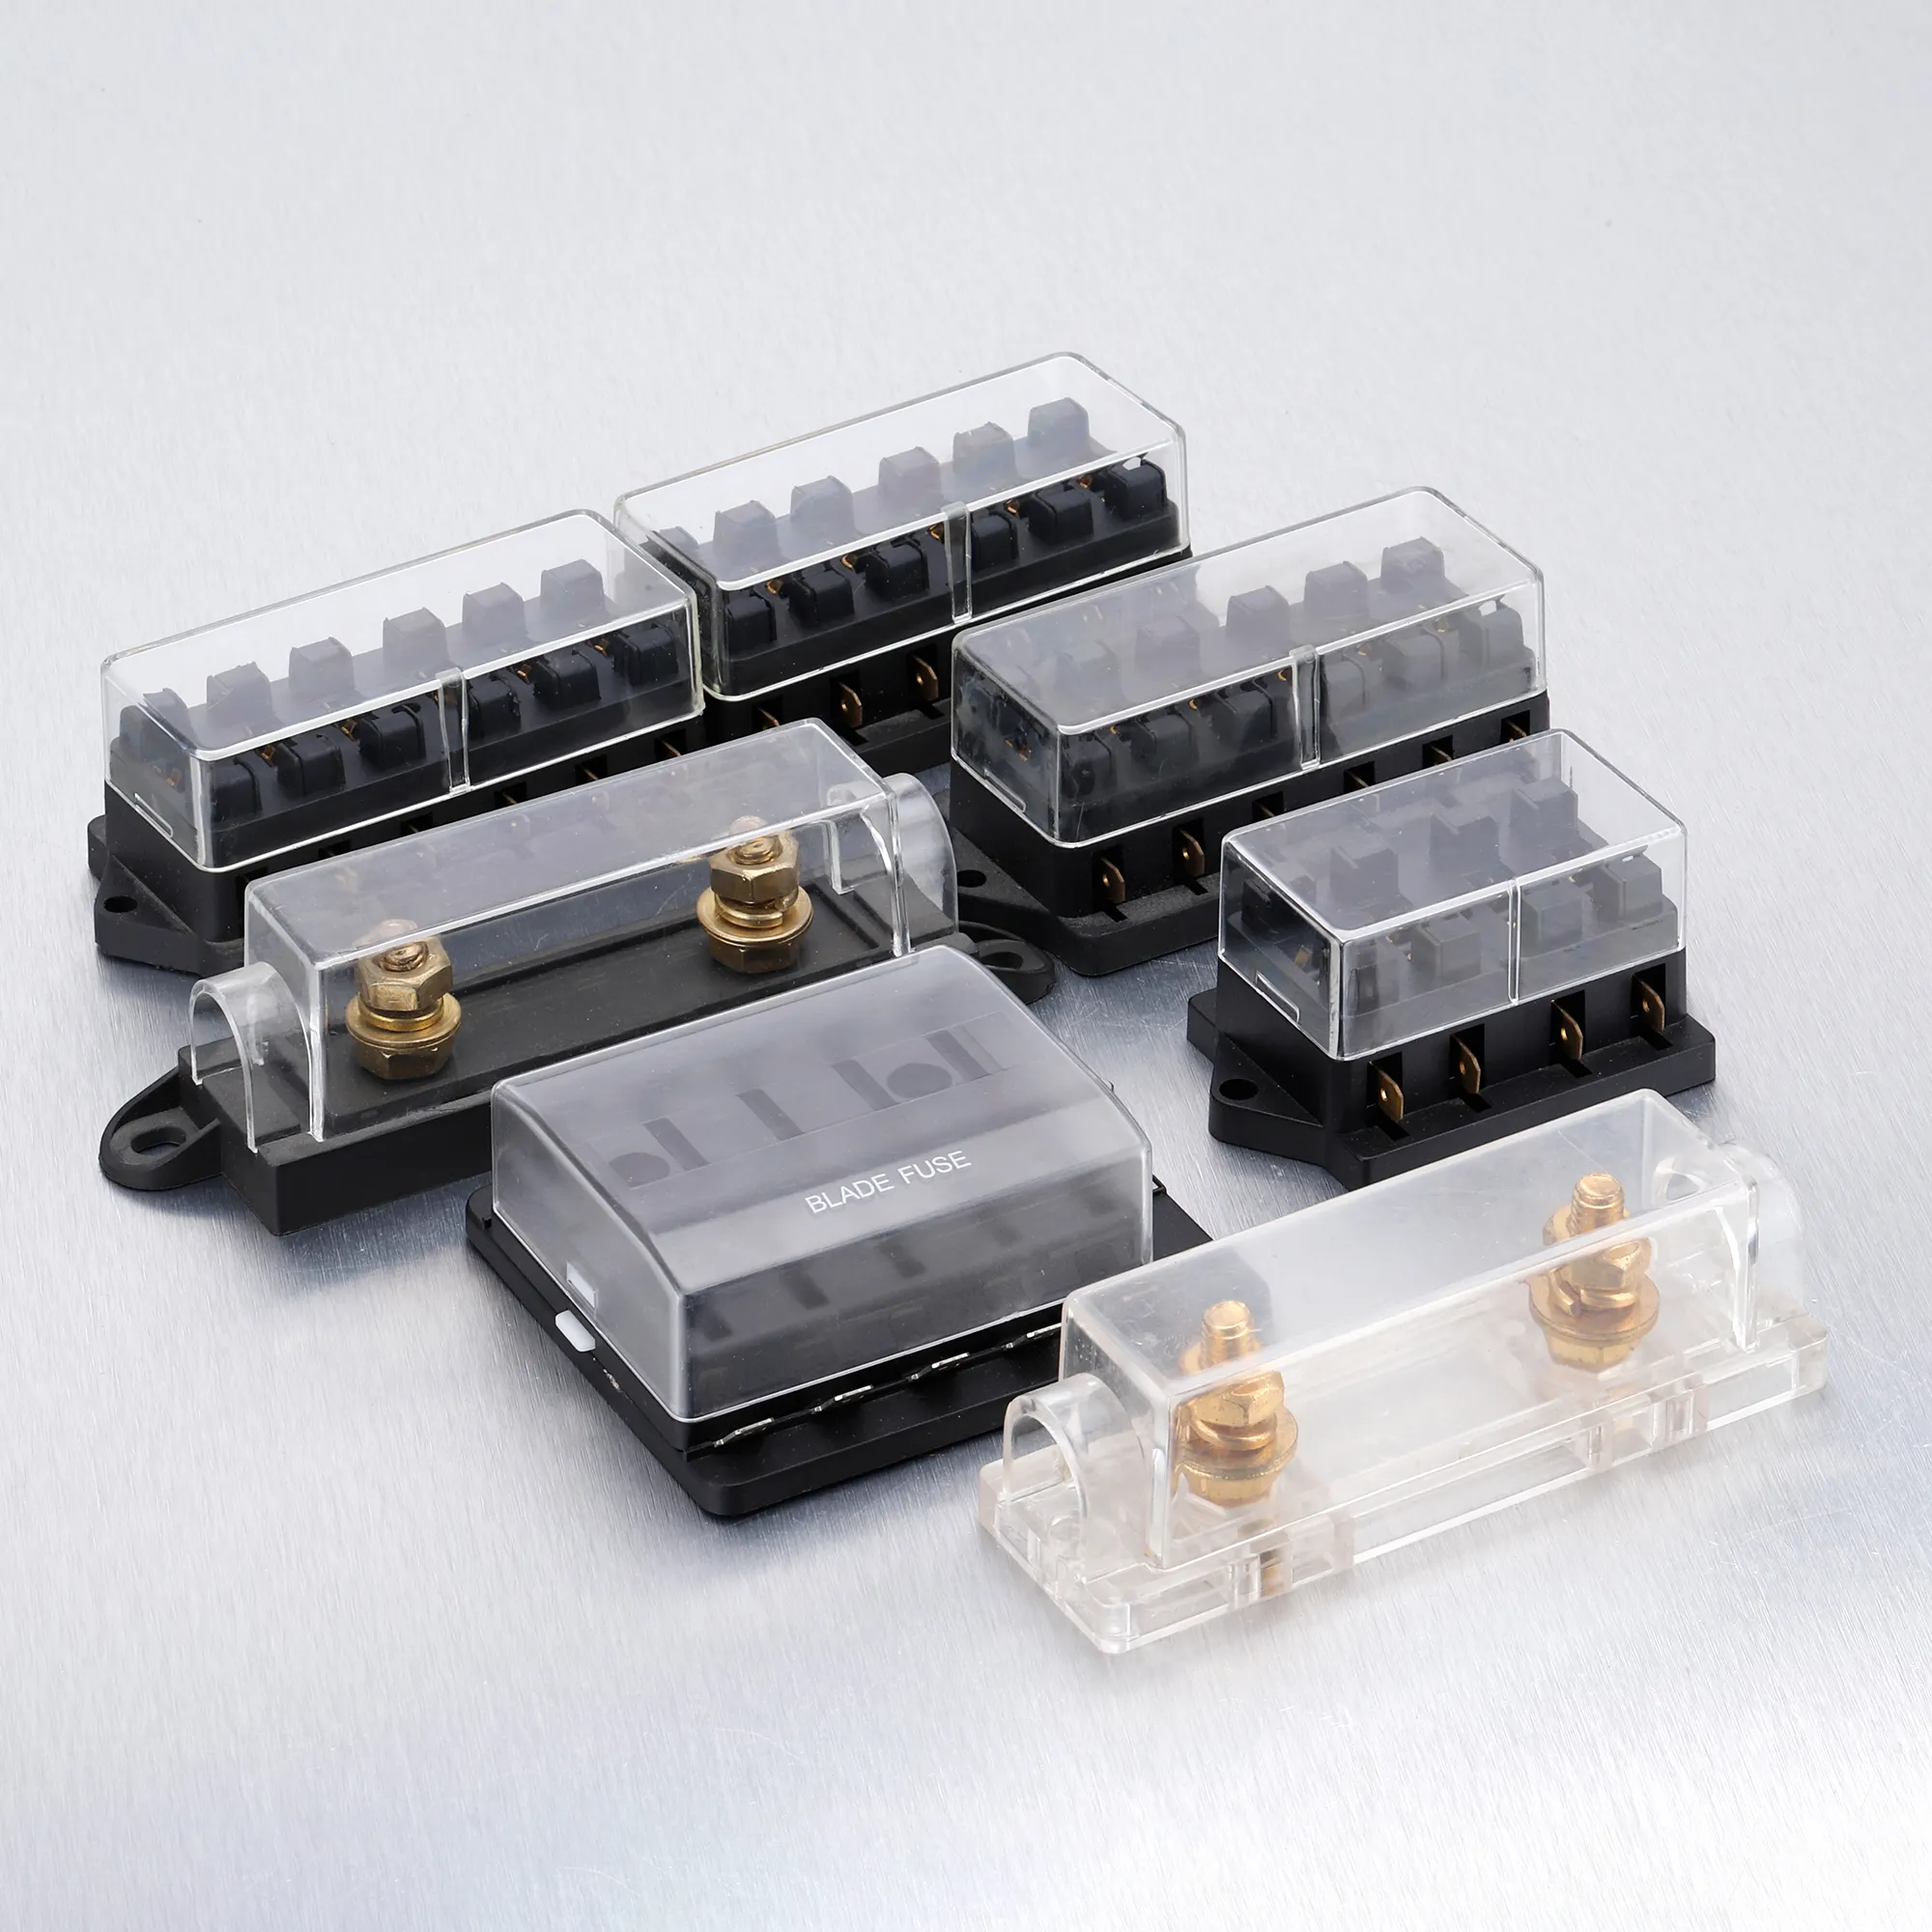 Caja de fusibles de hoja con fusibles led, minicircuito automático estándar de fabricante, 6/8/10/12 vías, para coche, camión y furgoneta